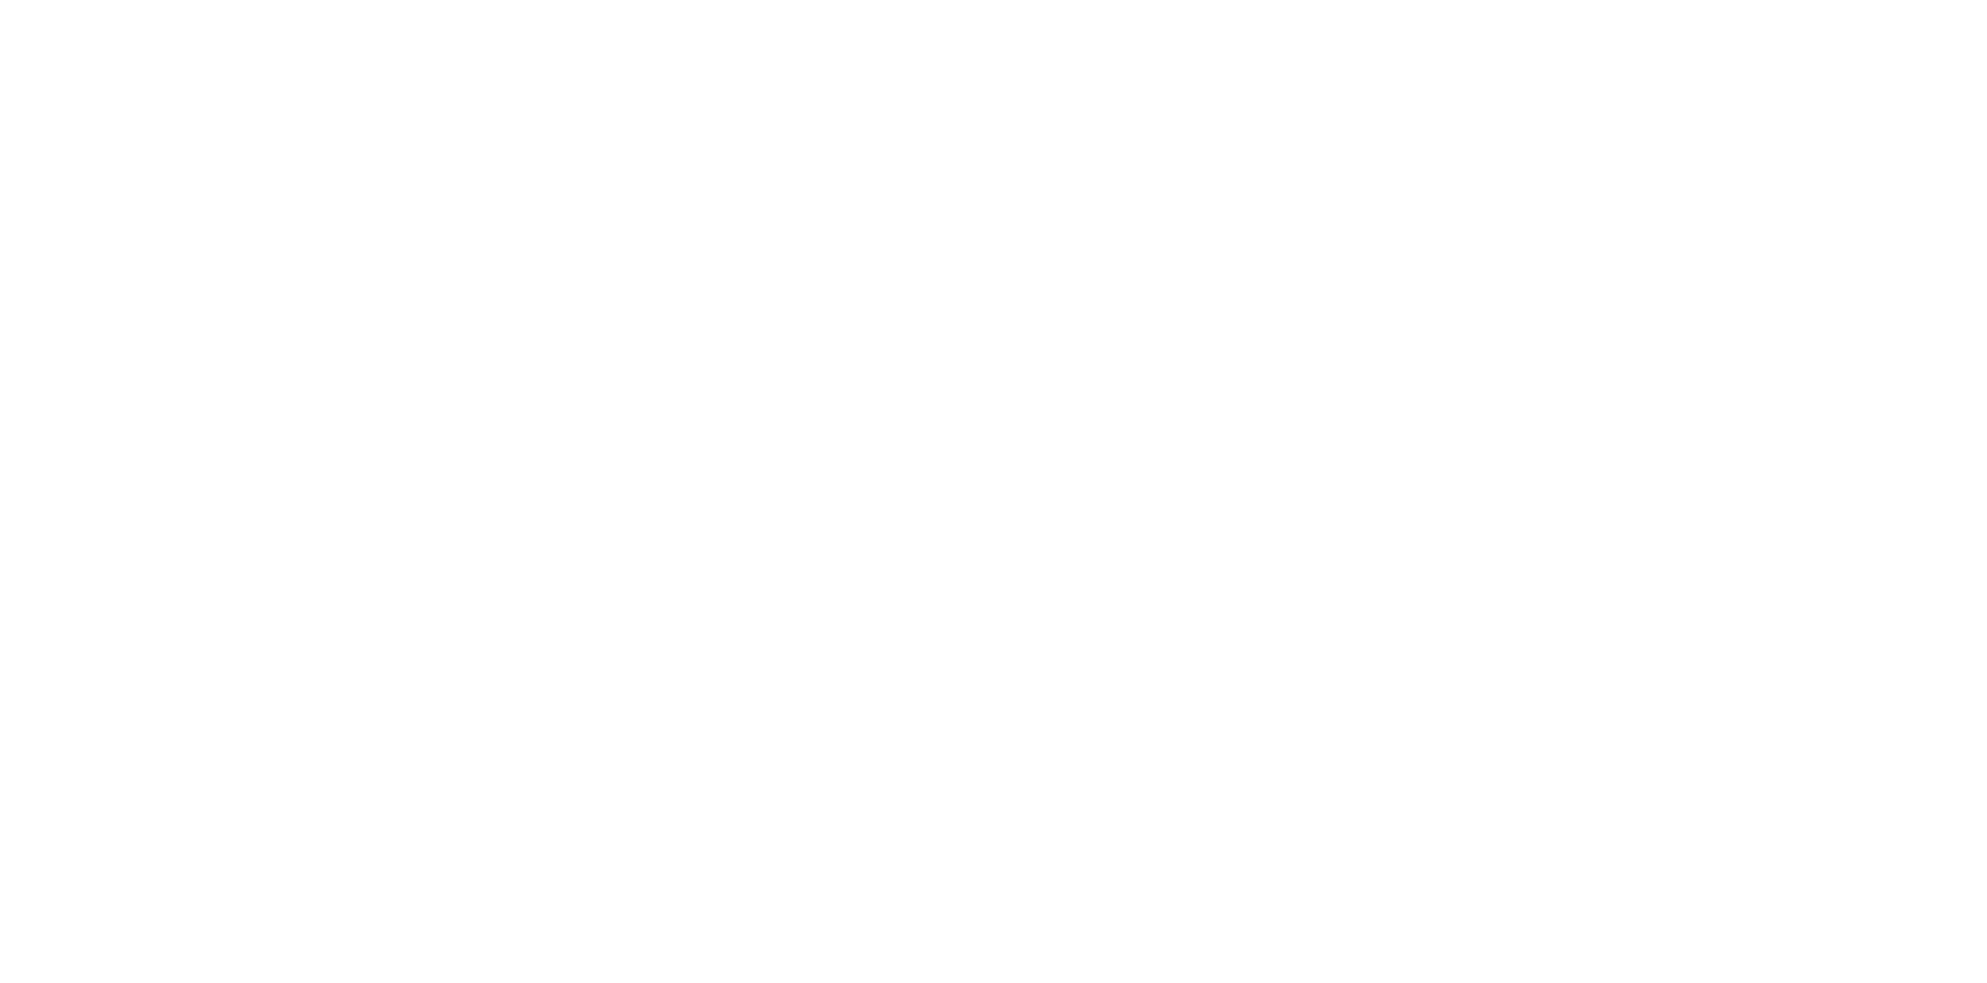 RWJ Barnabas Health, Cooperman Barnabas Medical Center